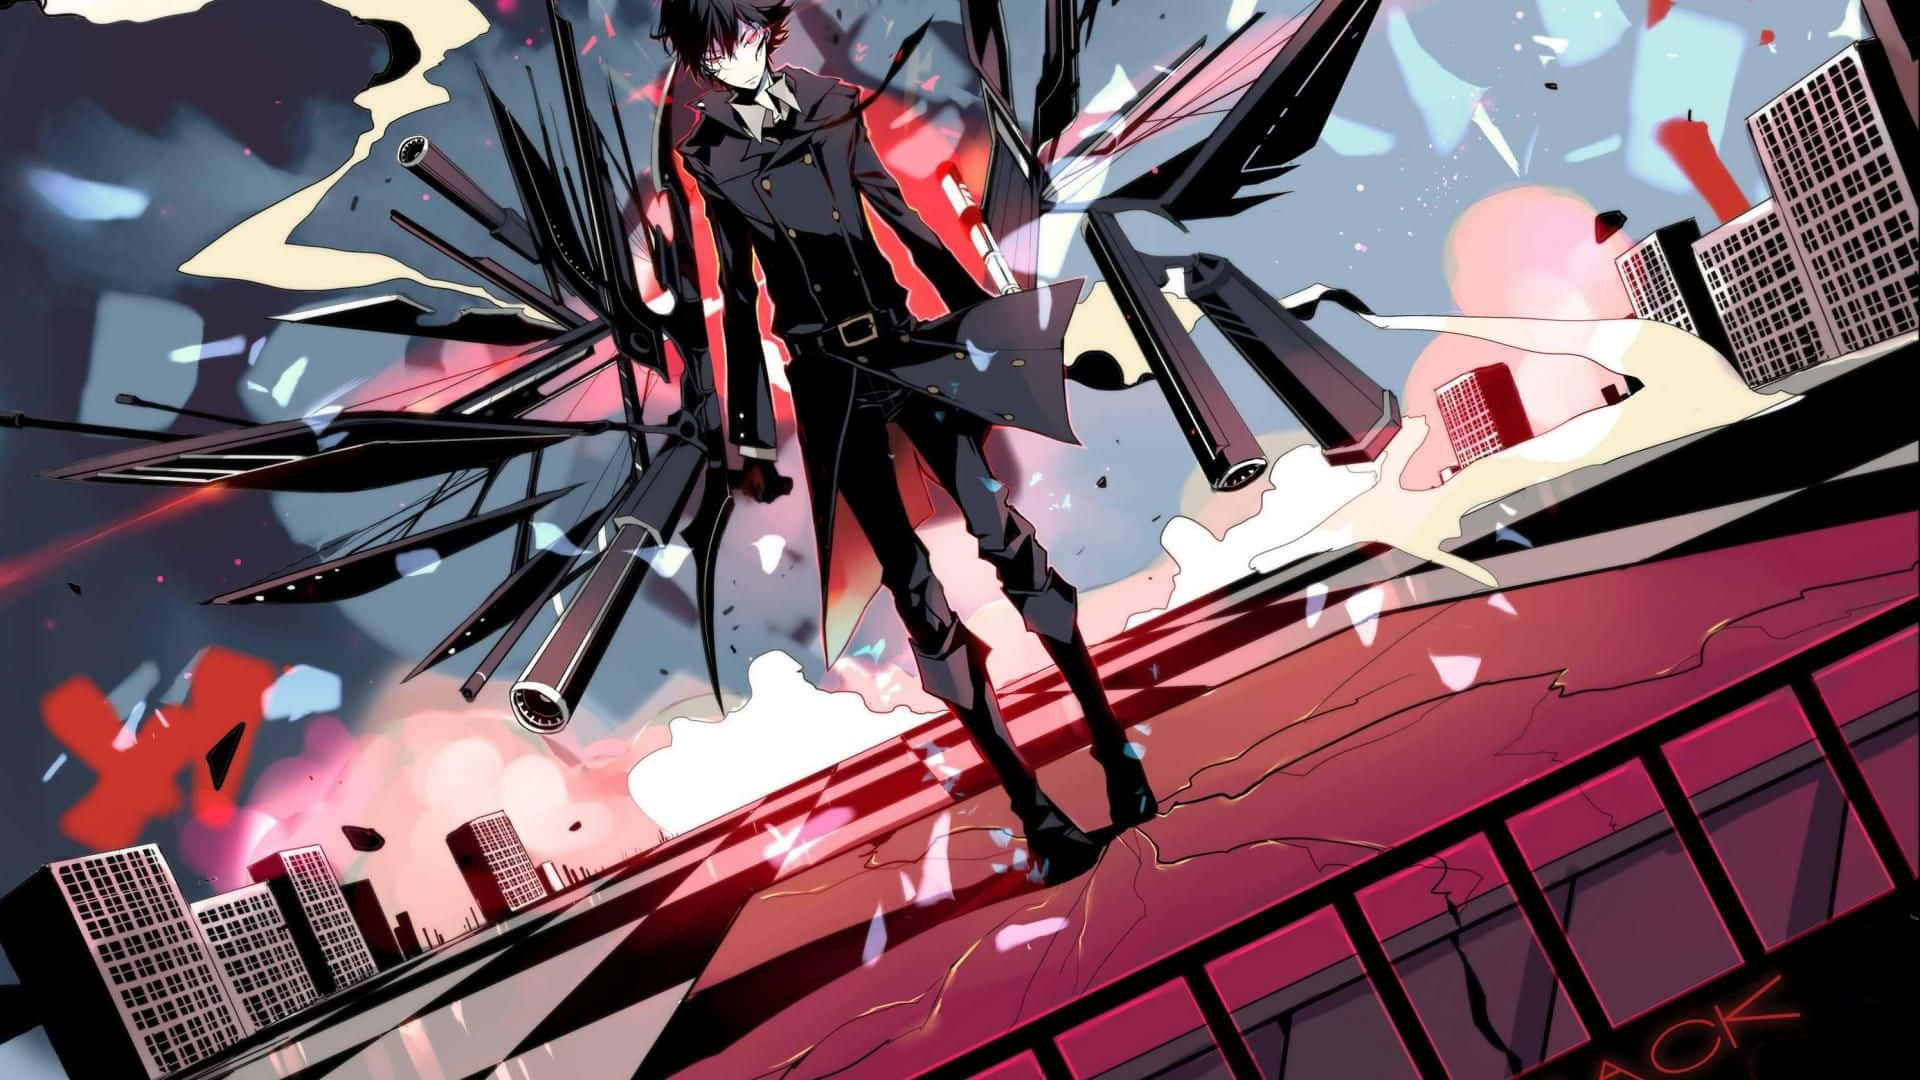 1080p Anime Weapons Arsenal Wallpaper